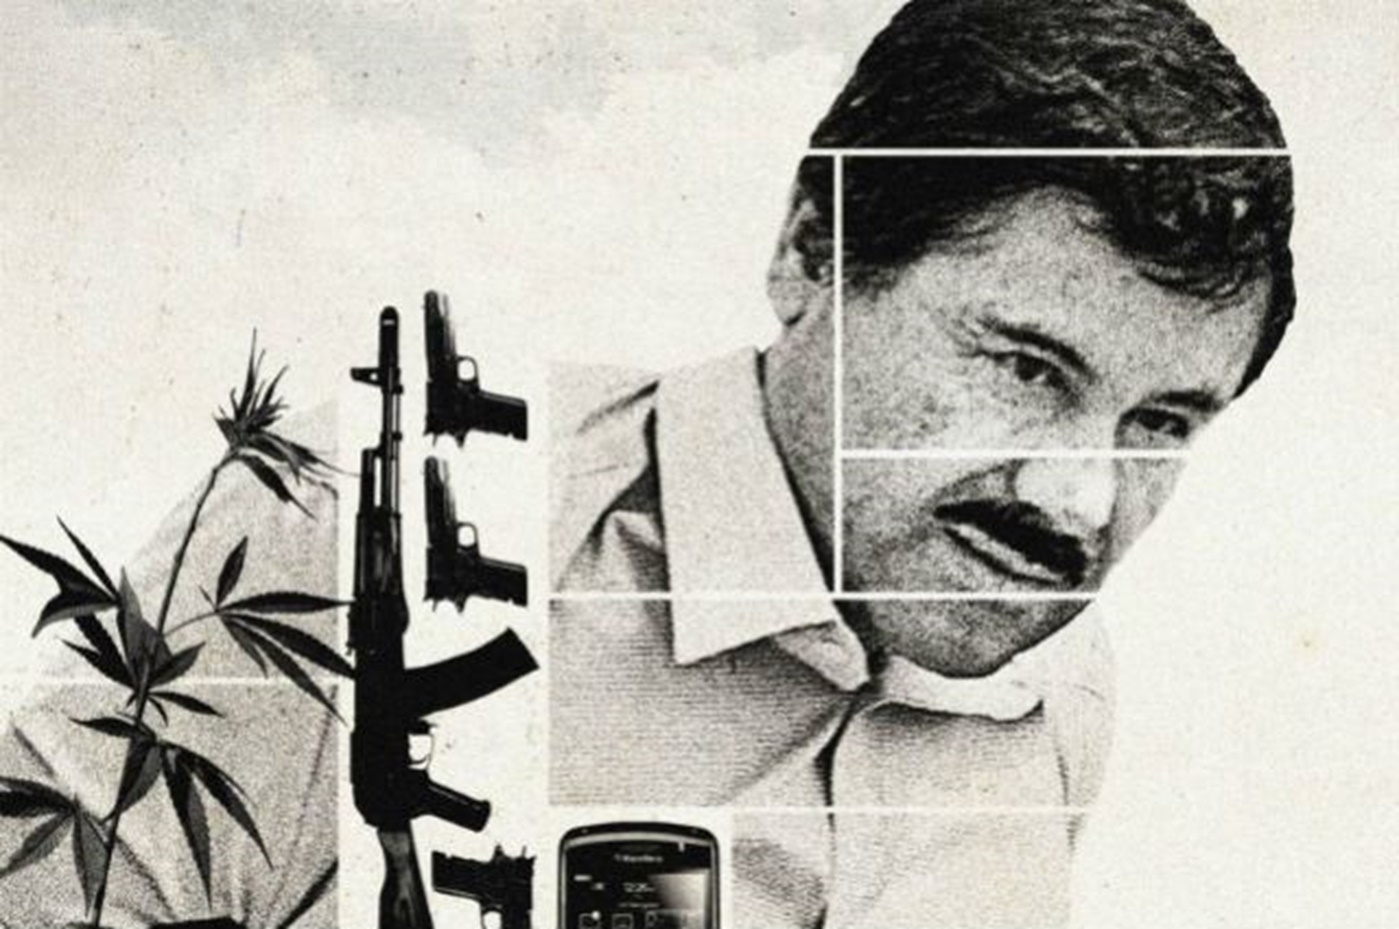 Abogados de "El Chapo" buscan anular sentencia de cadena perpetua dictada en 2019